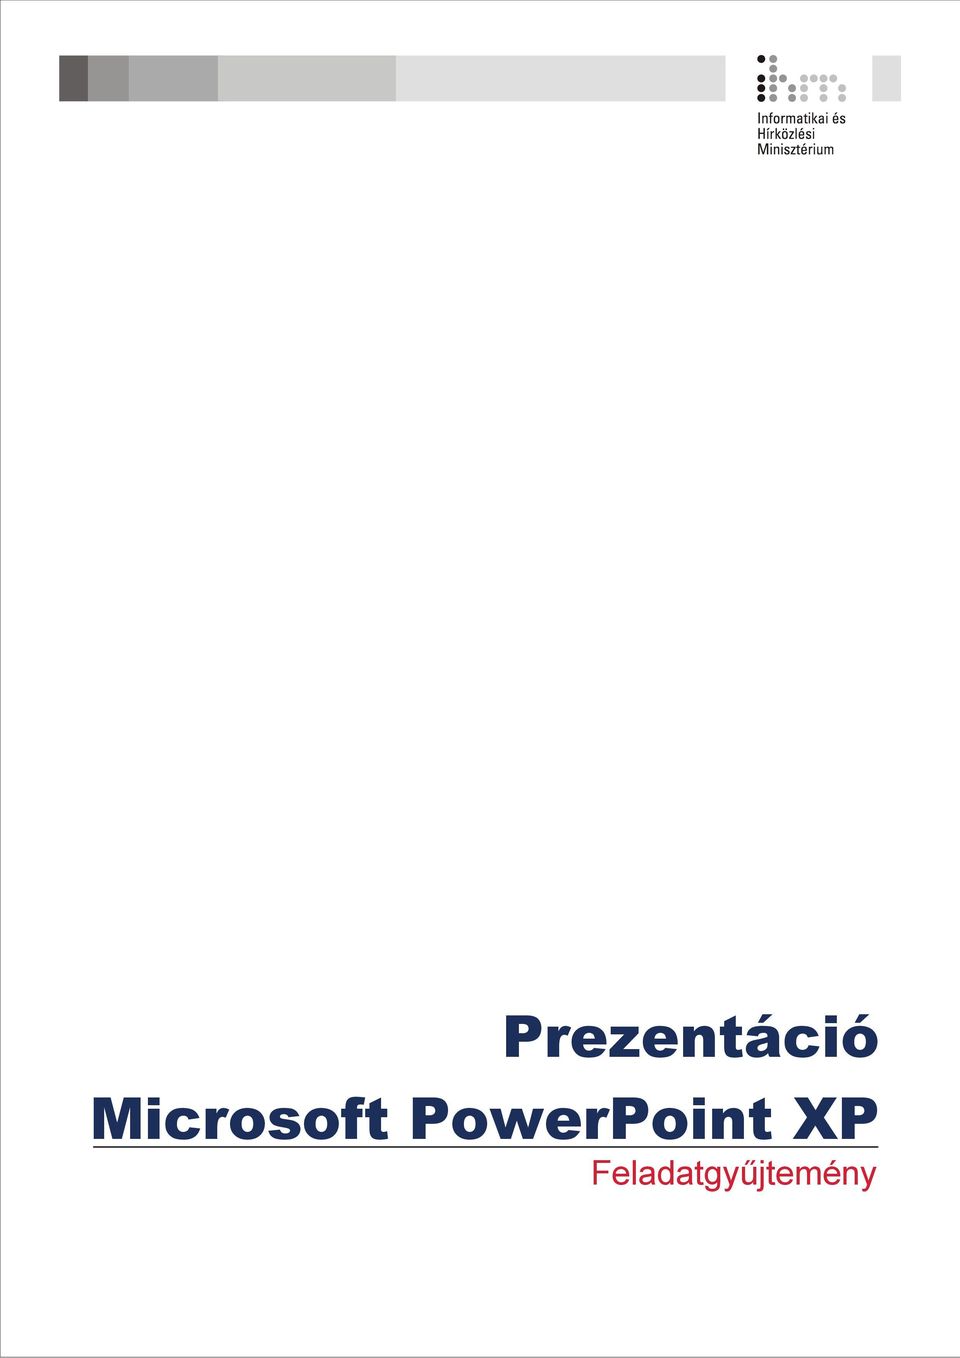 PowerPoint XP